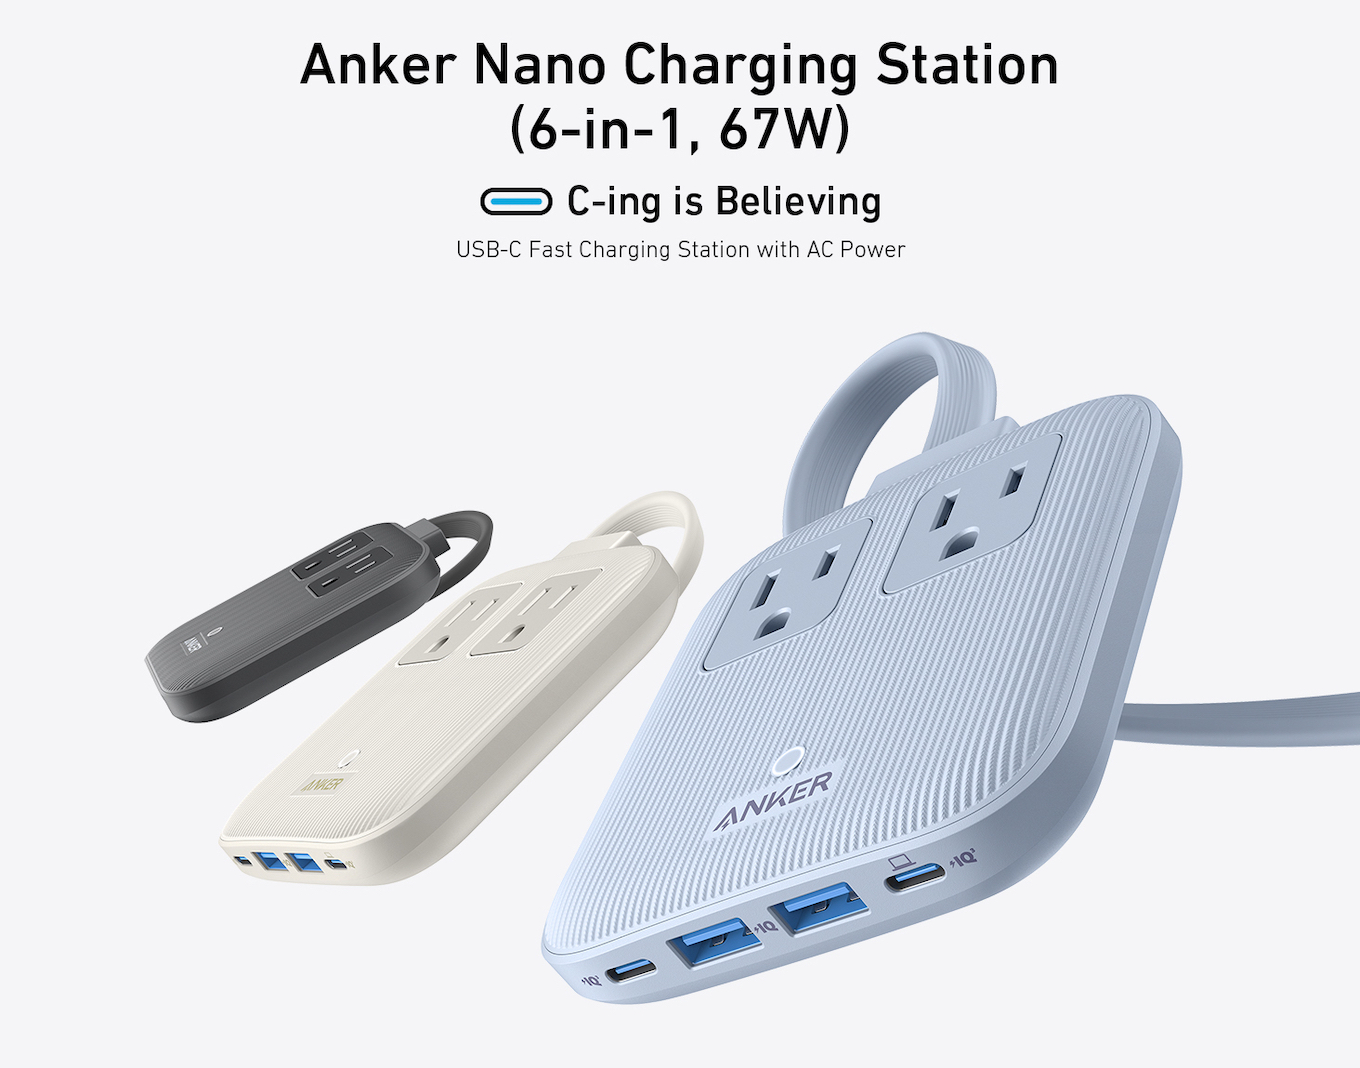 Anker Nano Charging Station (6-in-1, 67W)